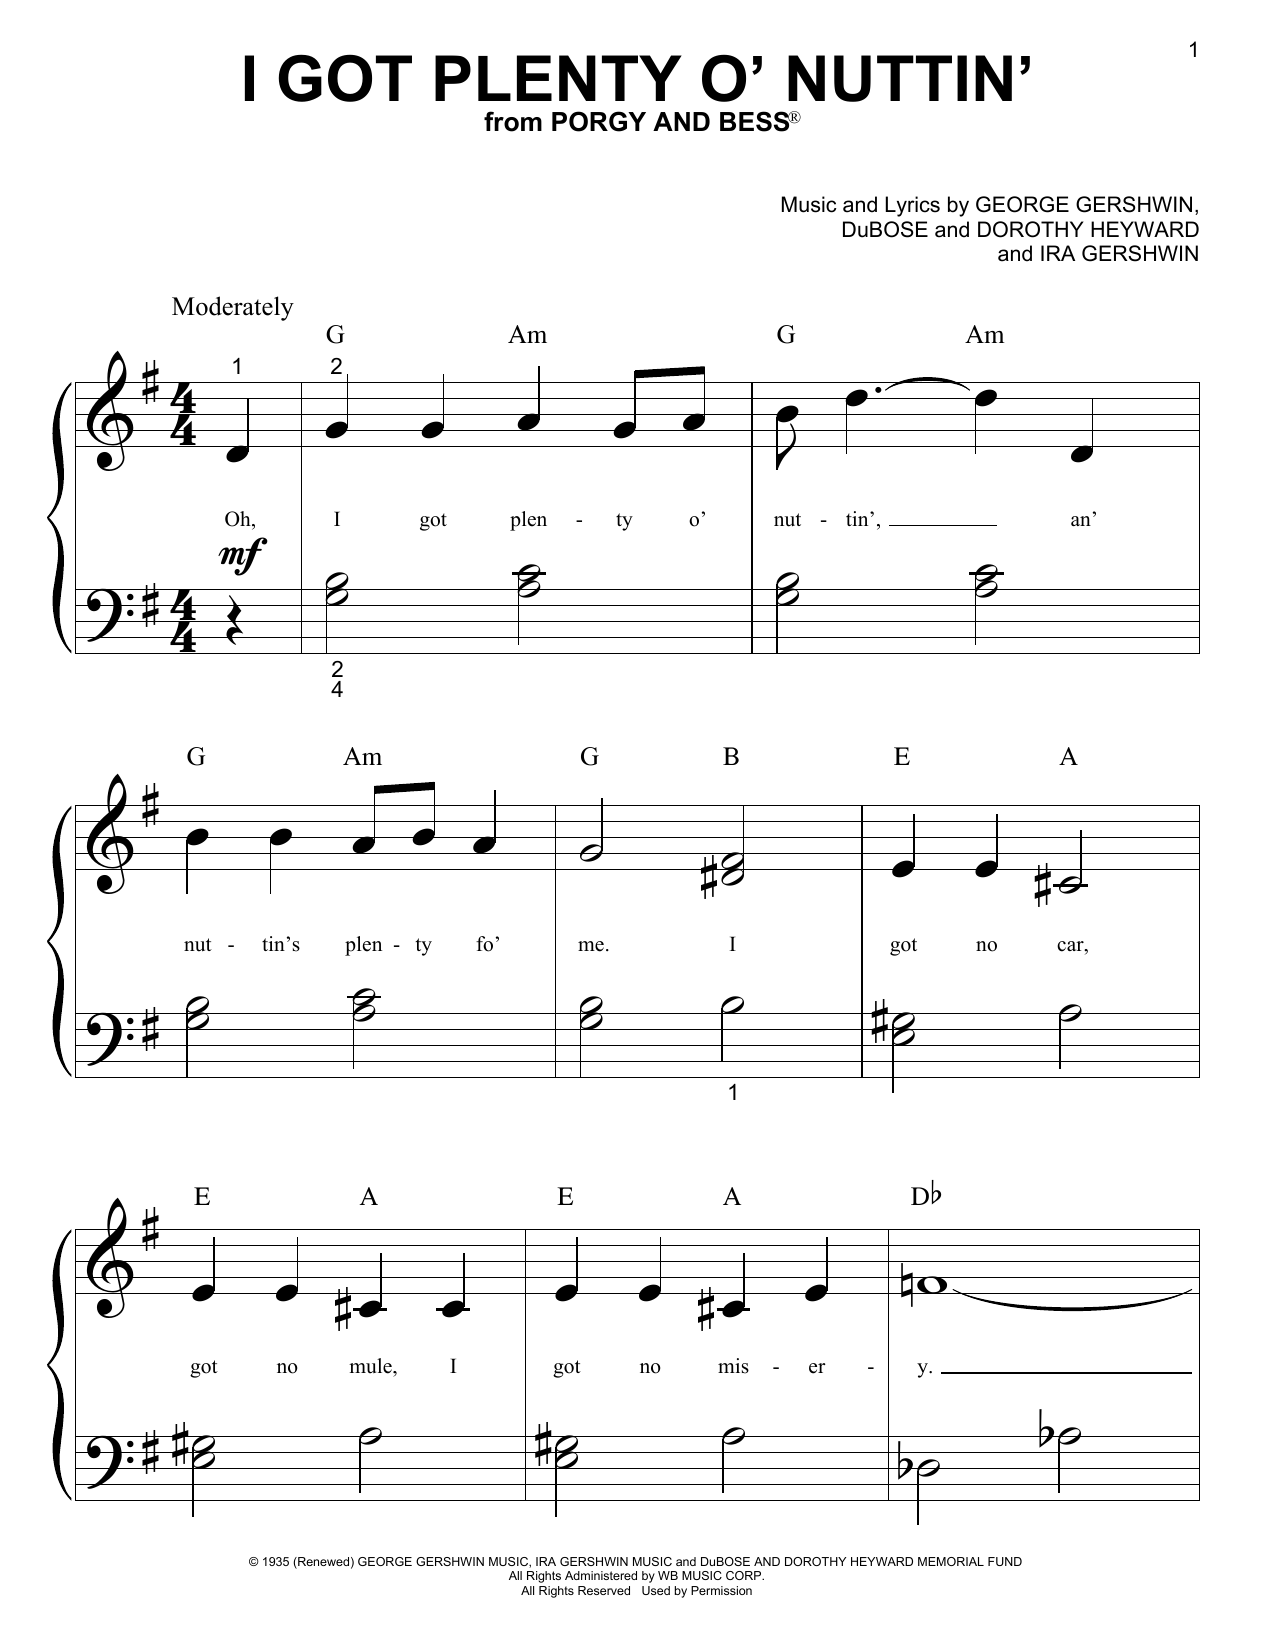 George Gershwin I Got Plenty O' Nuttin' Sheet Music Notes & Chords for Violin - Download or Print PDF